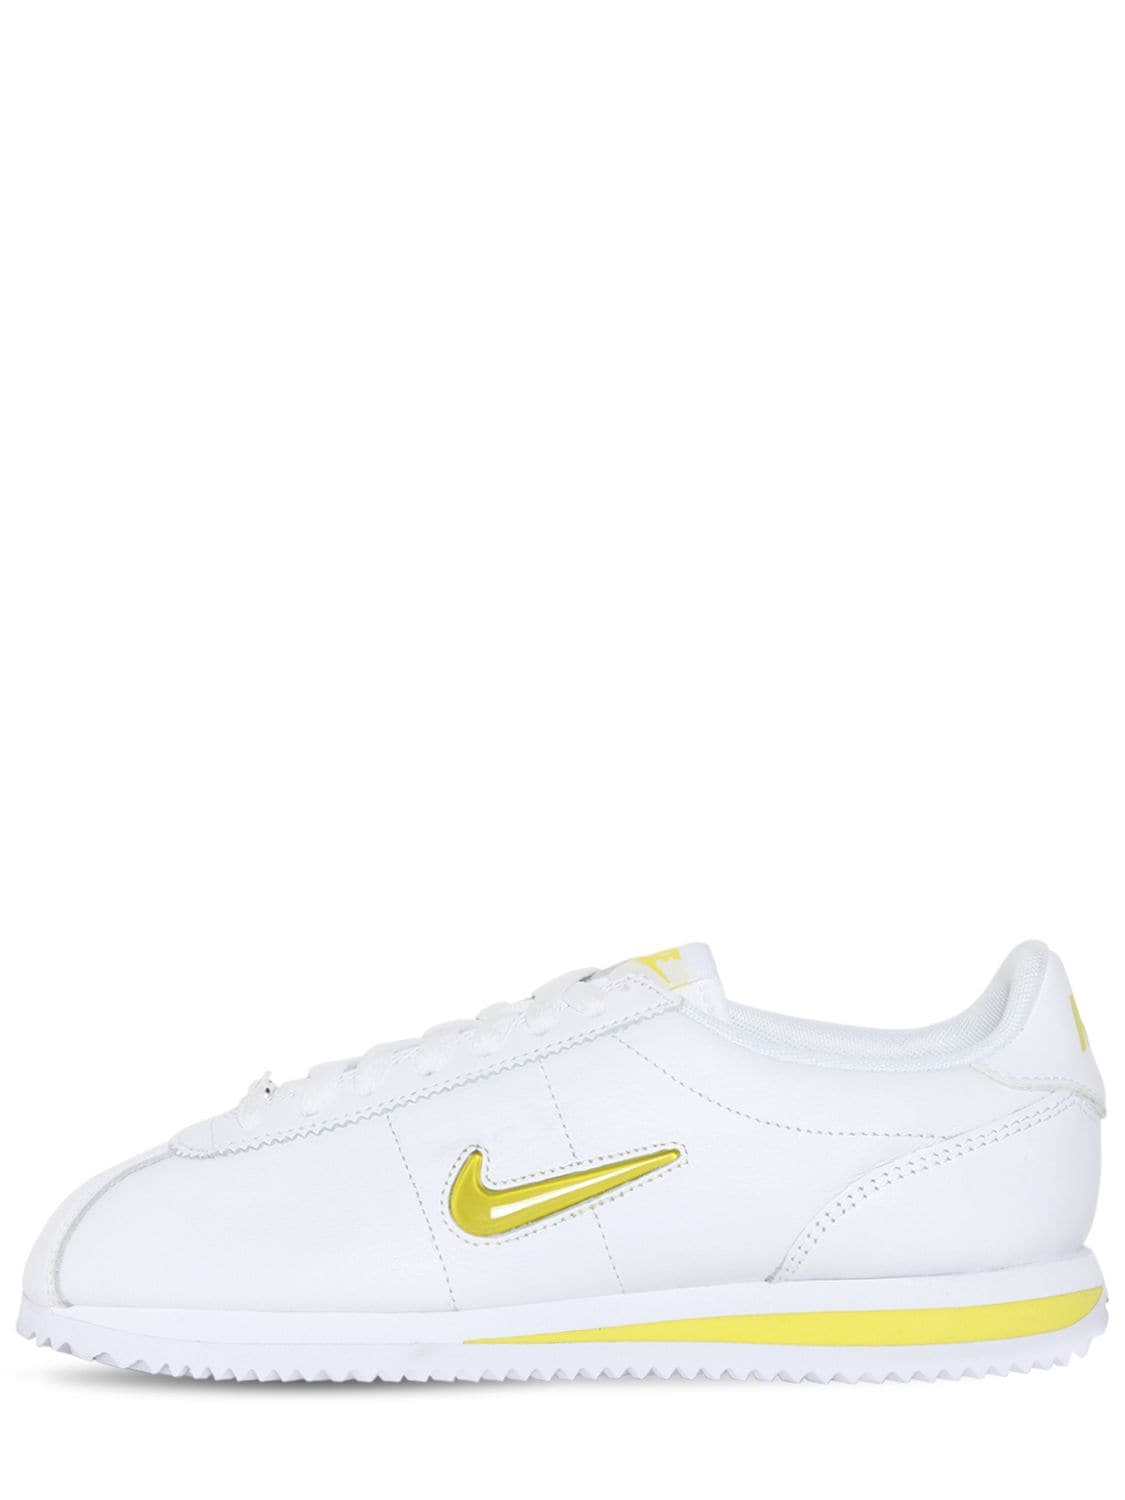 Nike Cortez Basic Jewel 18 Sneakers In White/yellow